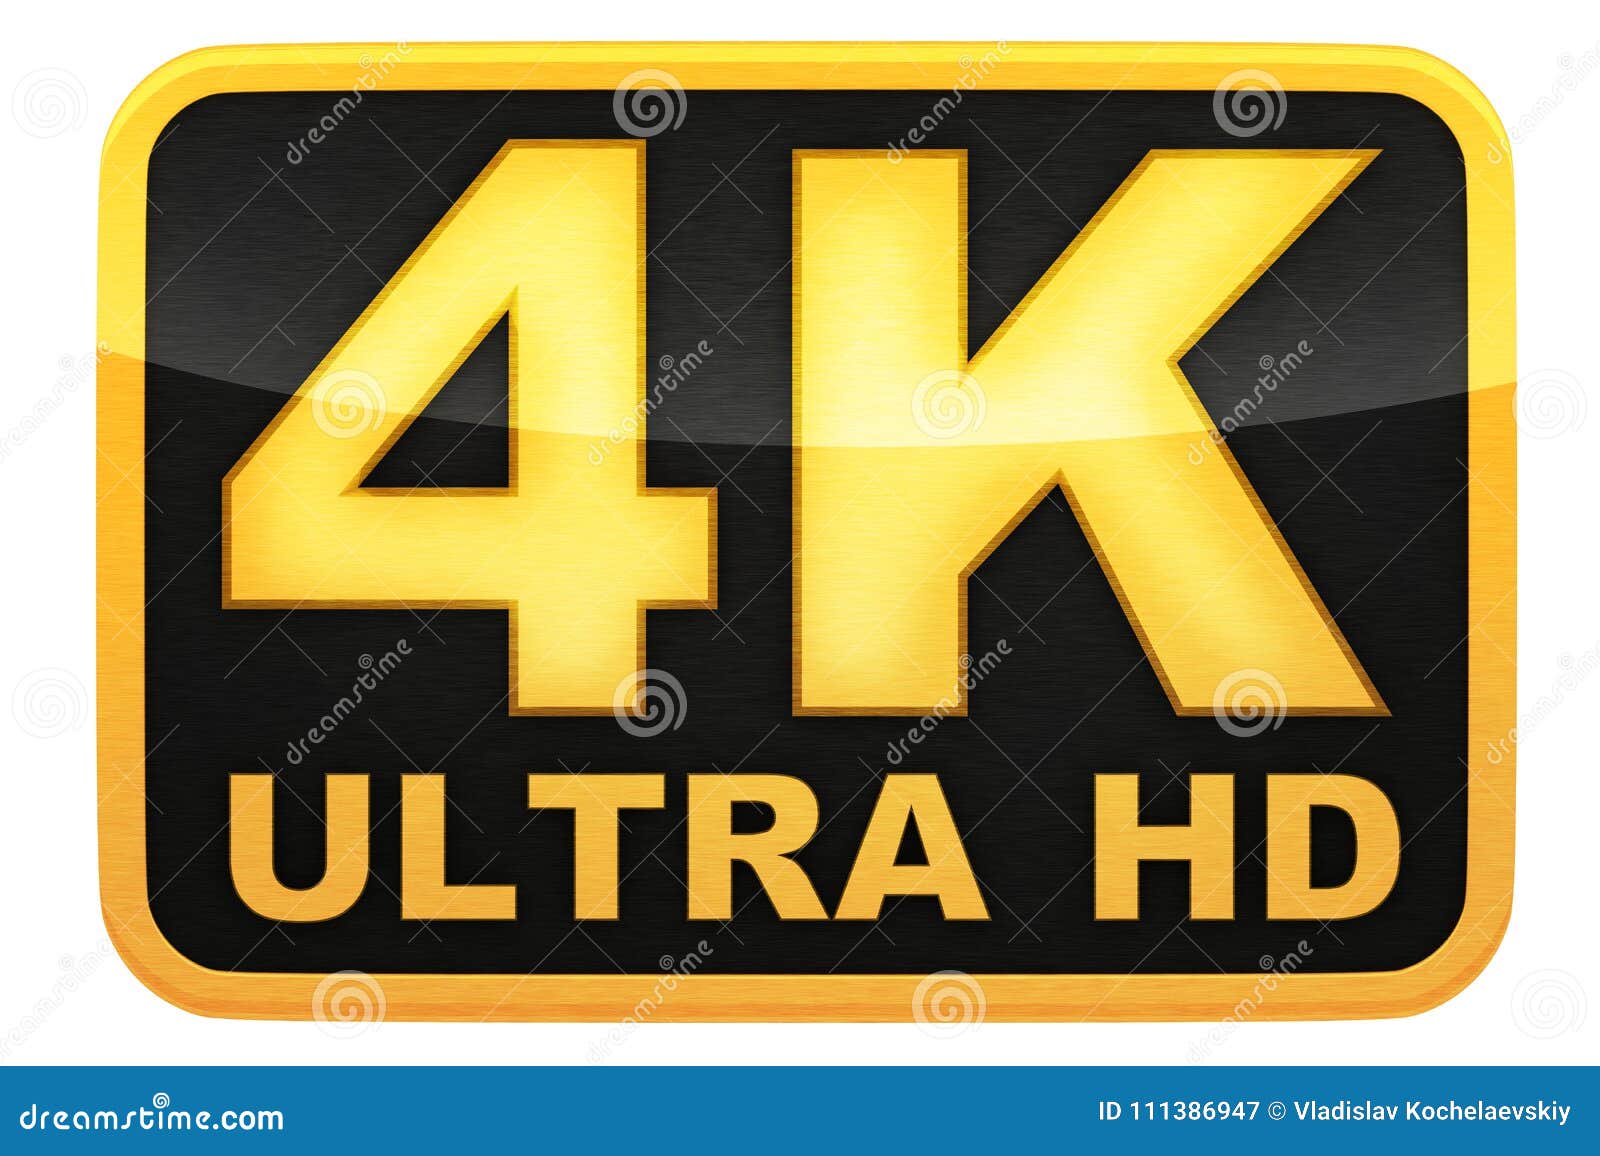 4k ultra hd logo